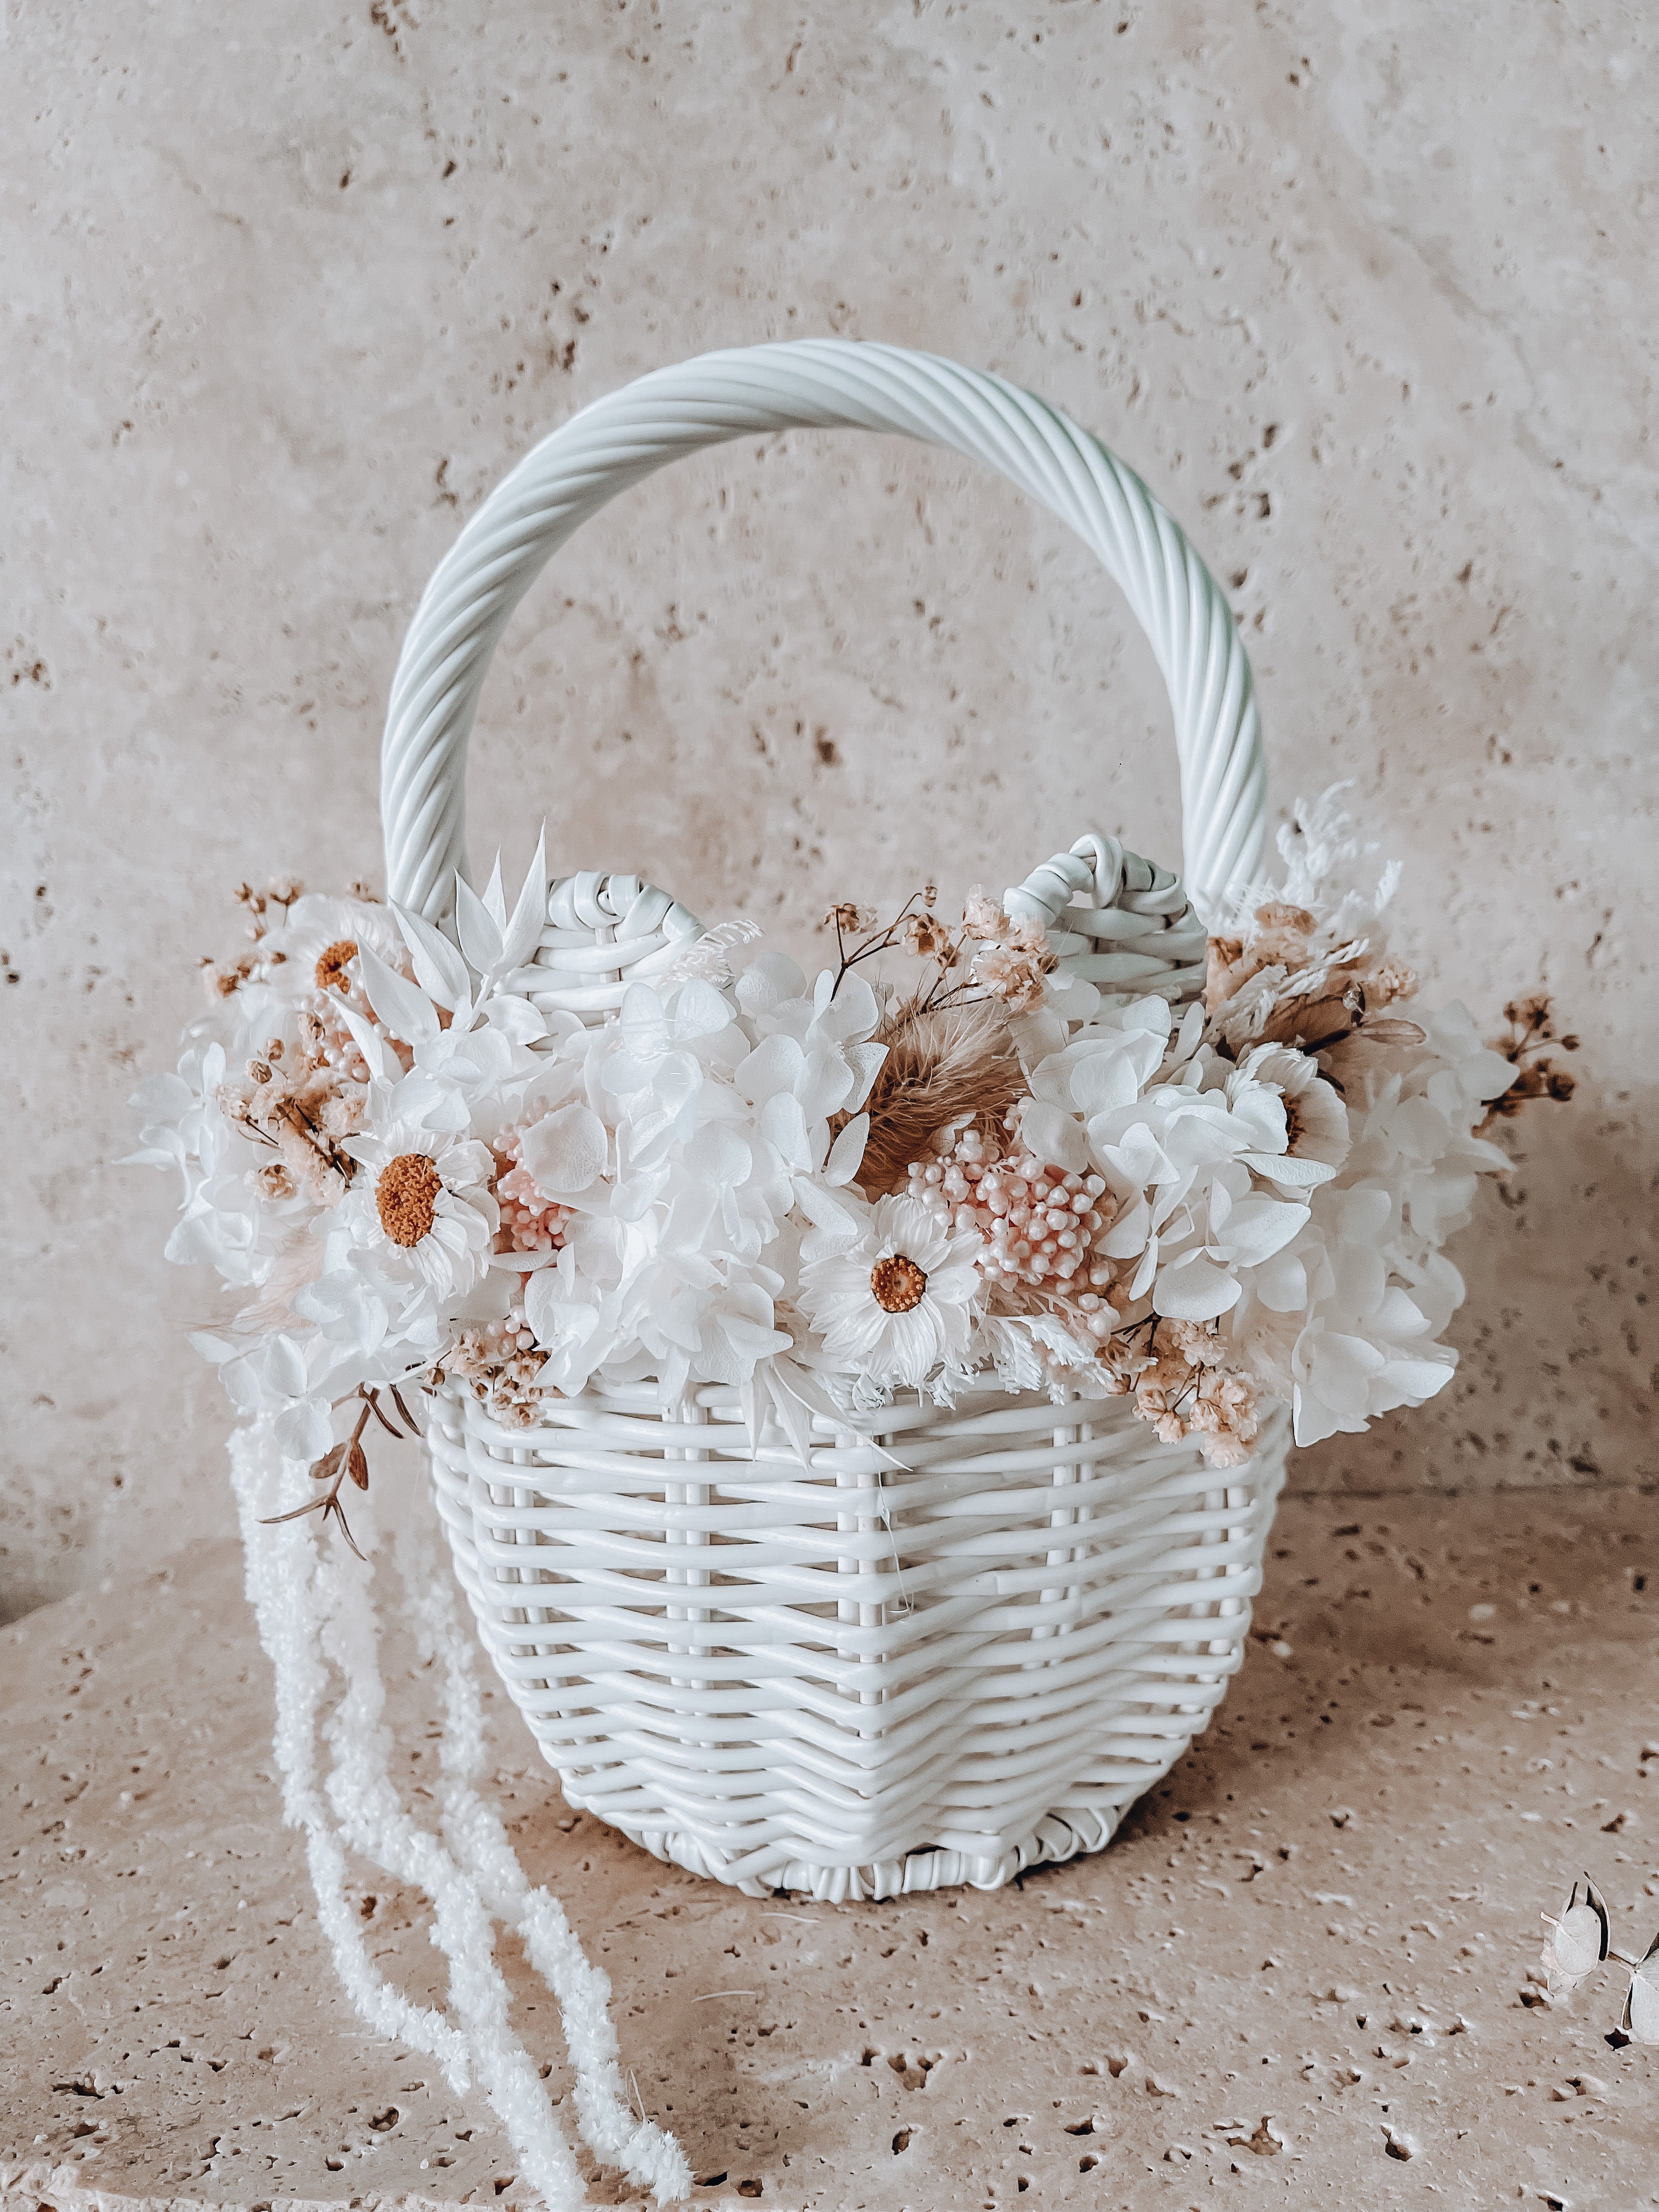 Everlasting bunny basket.